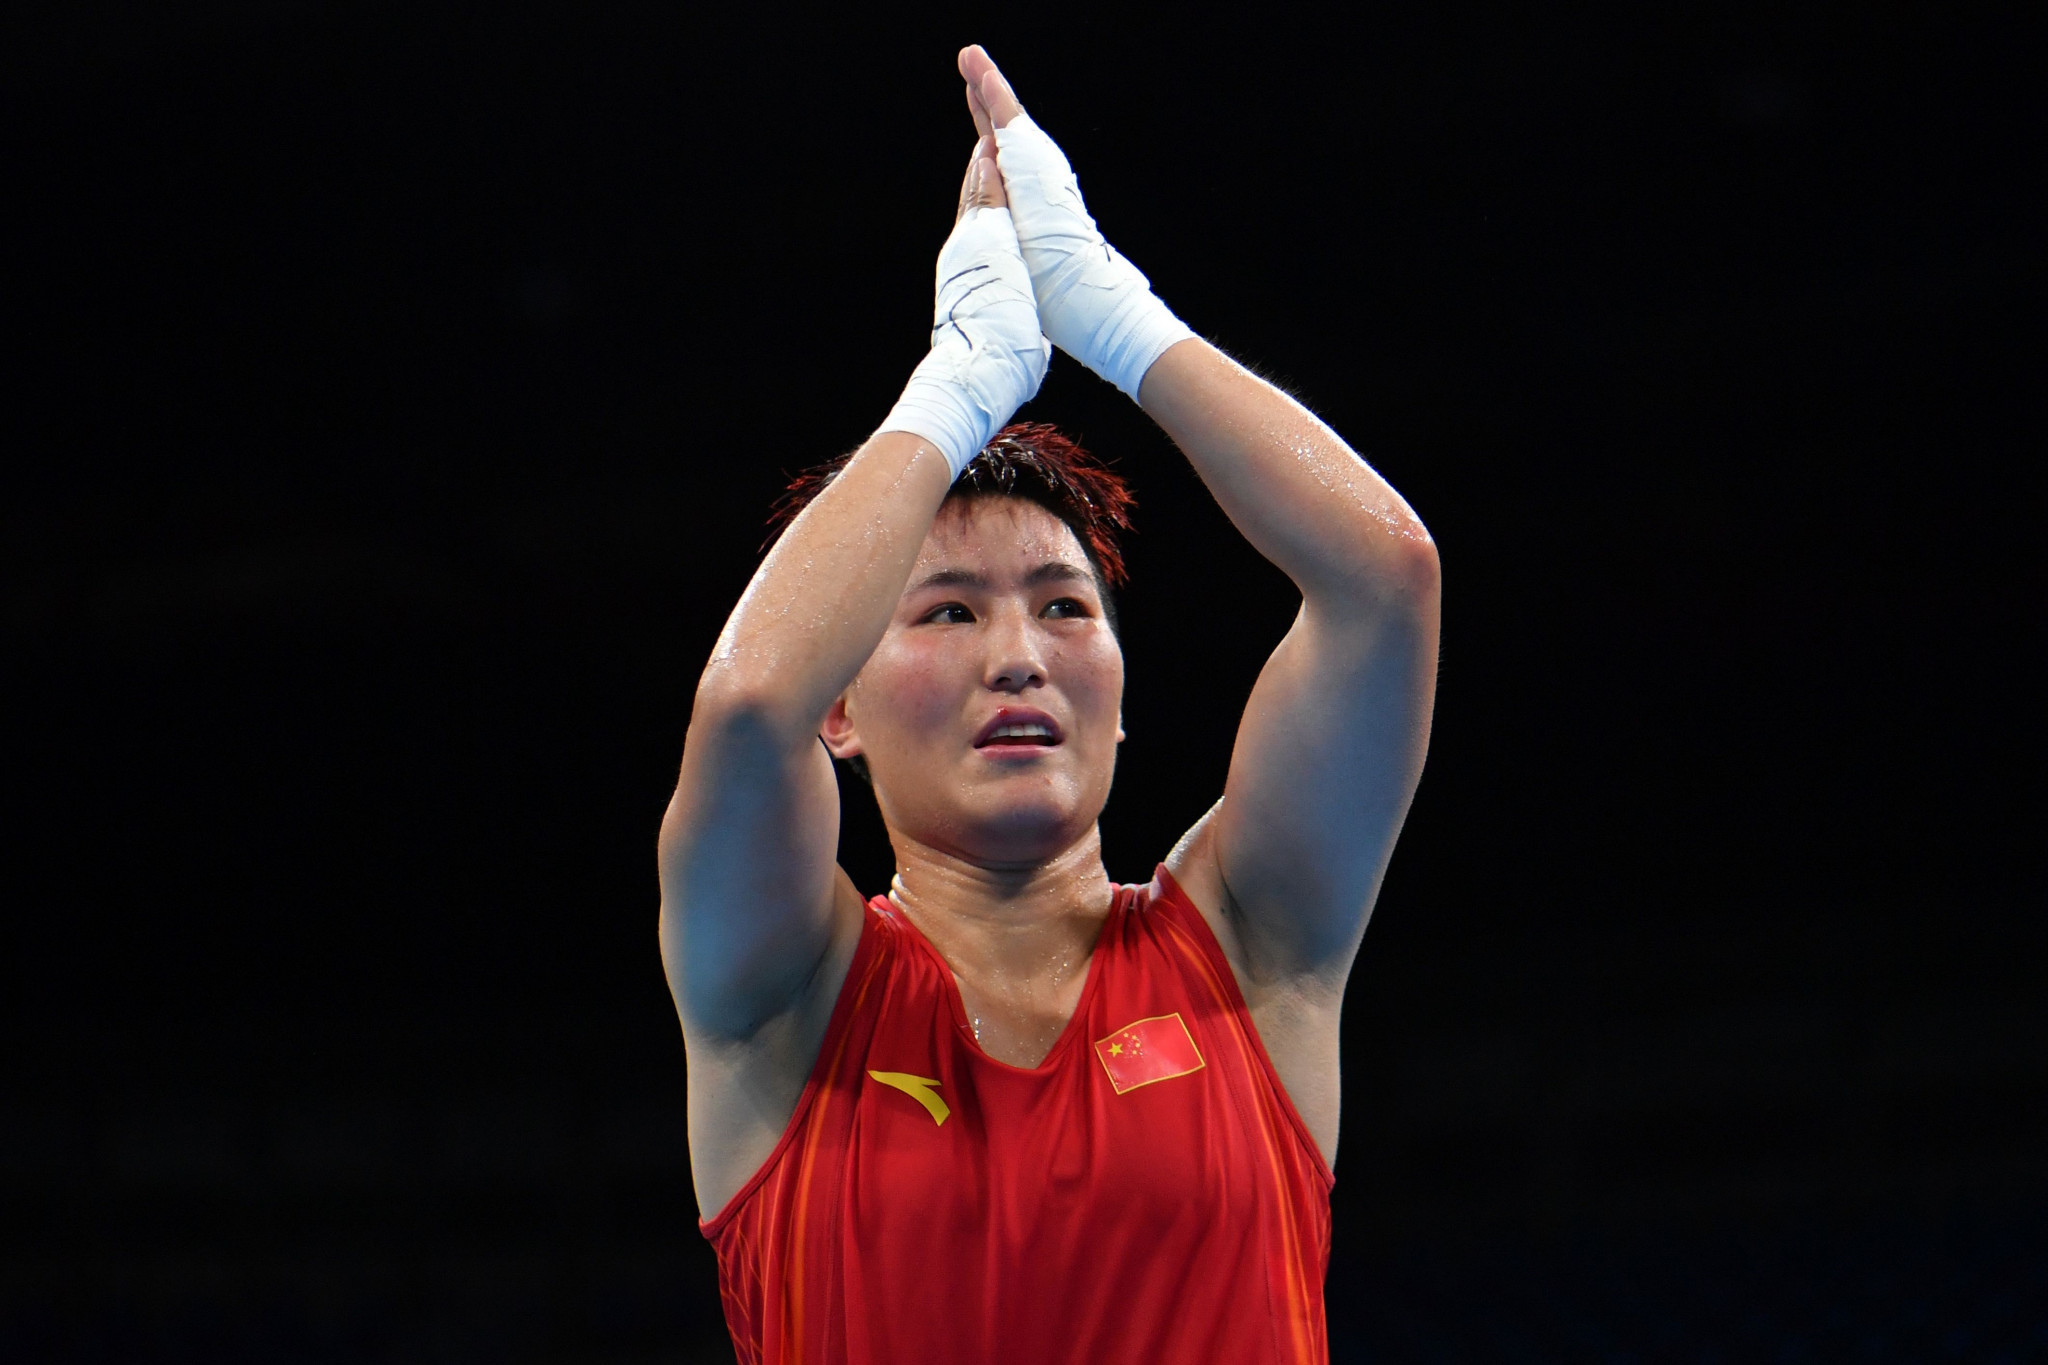 Yin books semi-final spot at Asian Women's Boxing Championships